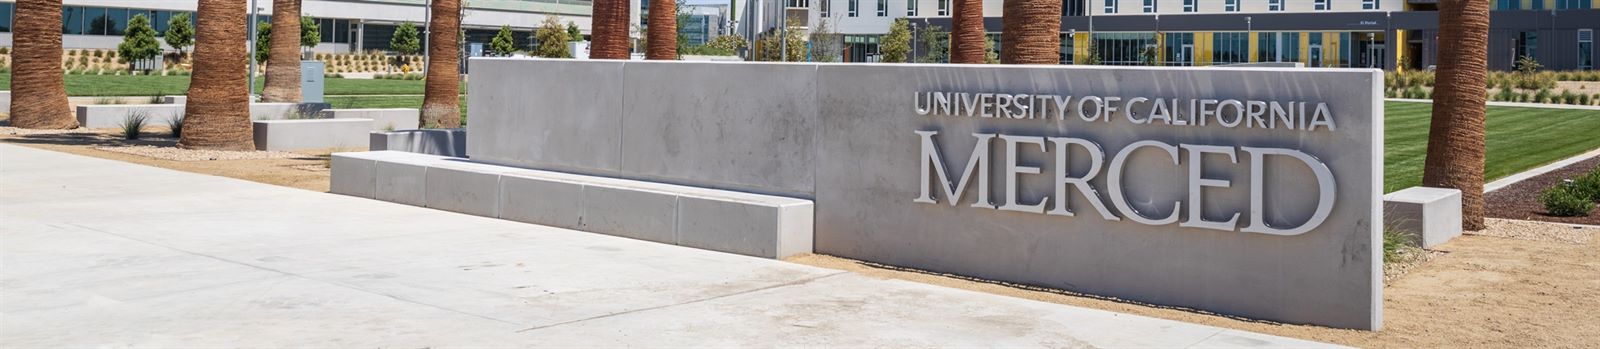 UC Merced Campus Sign